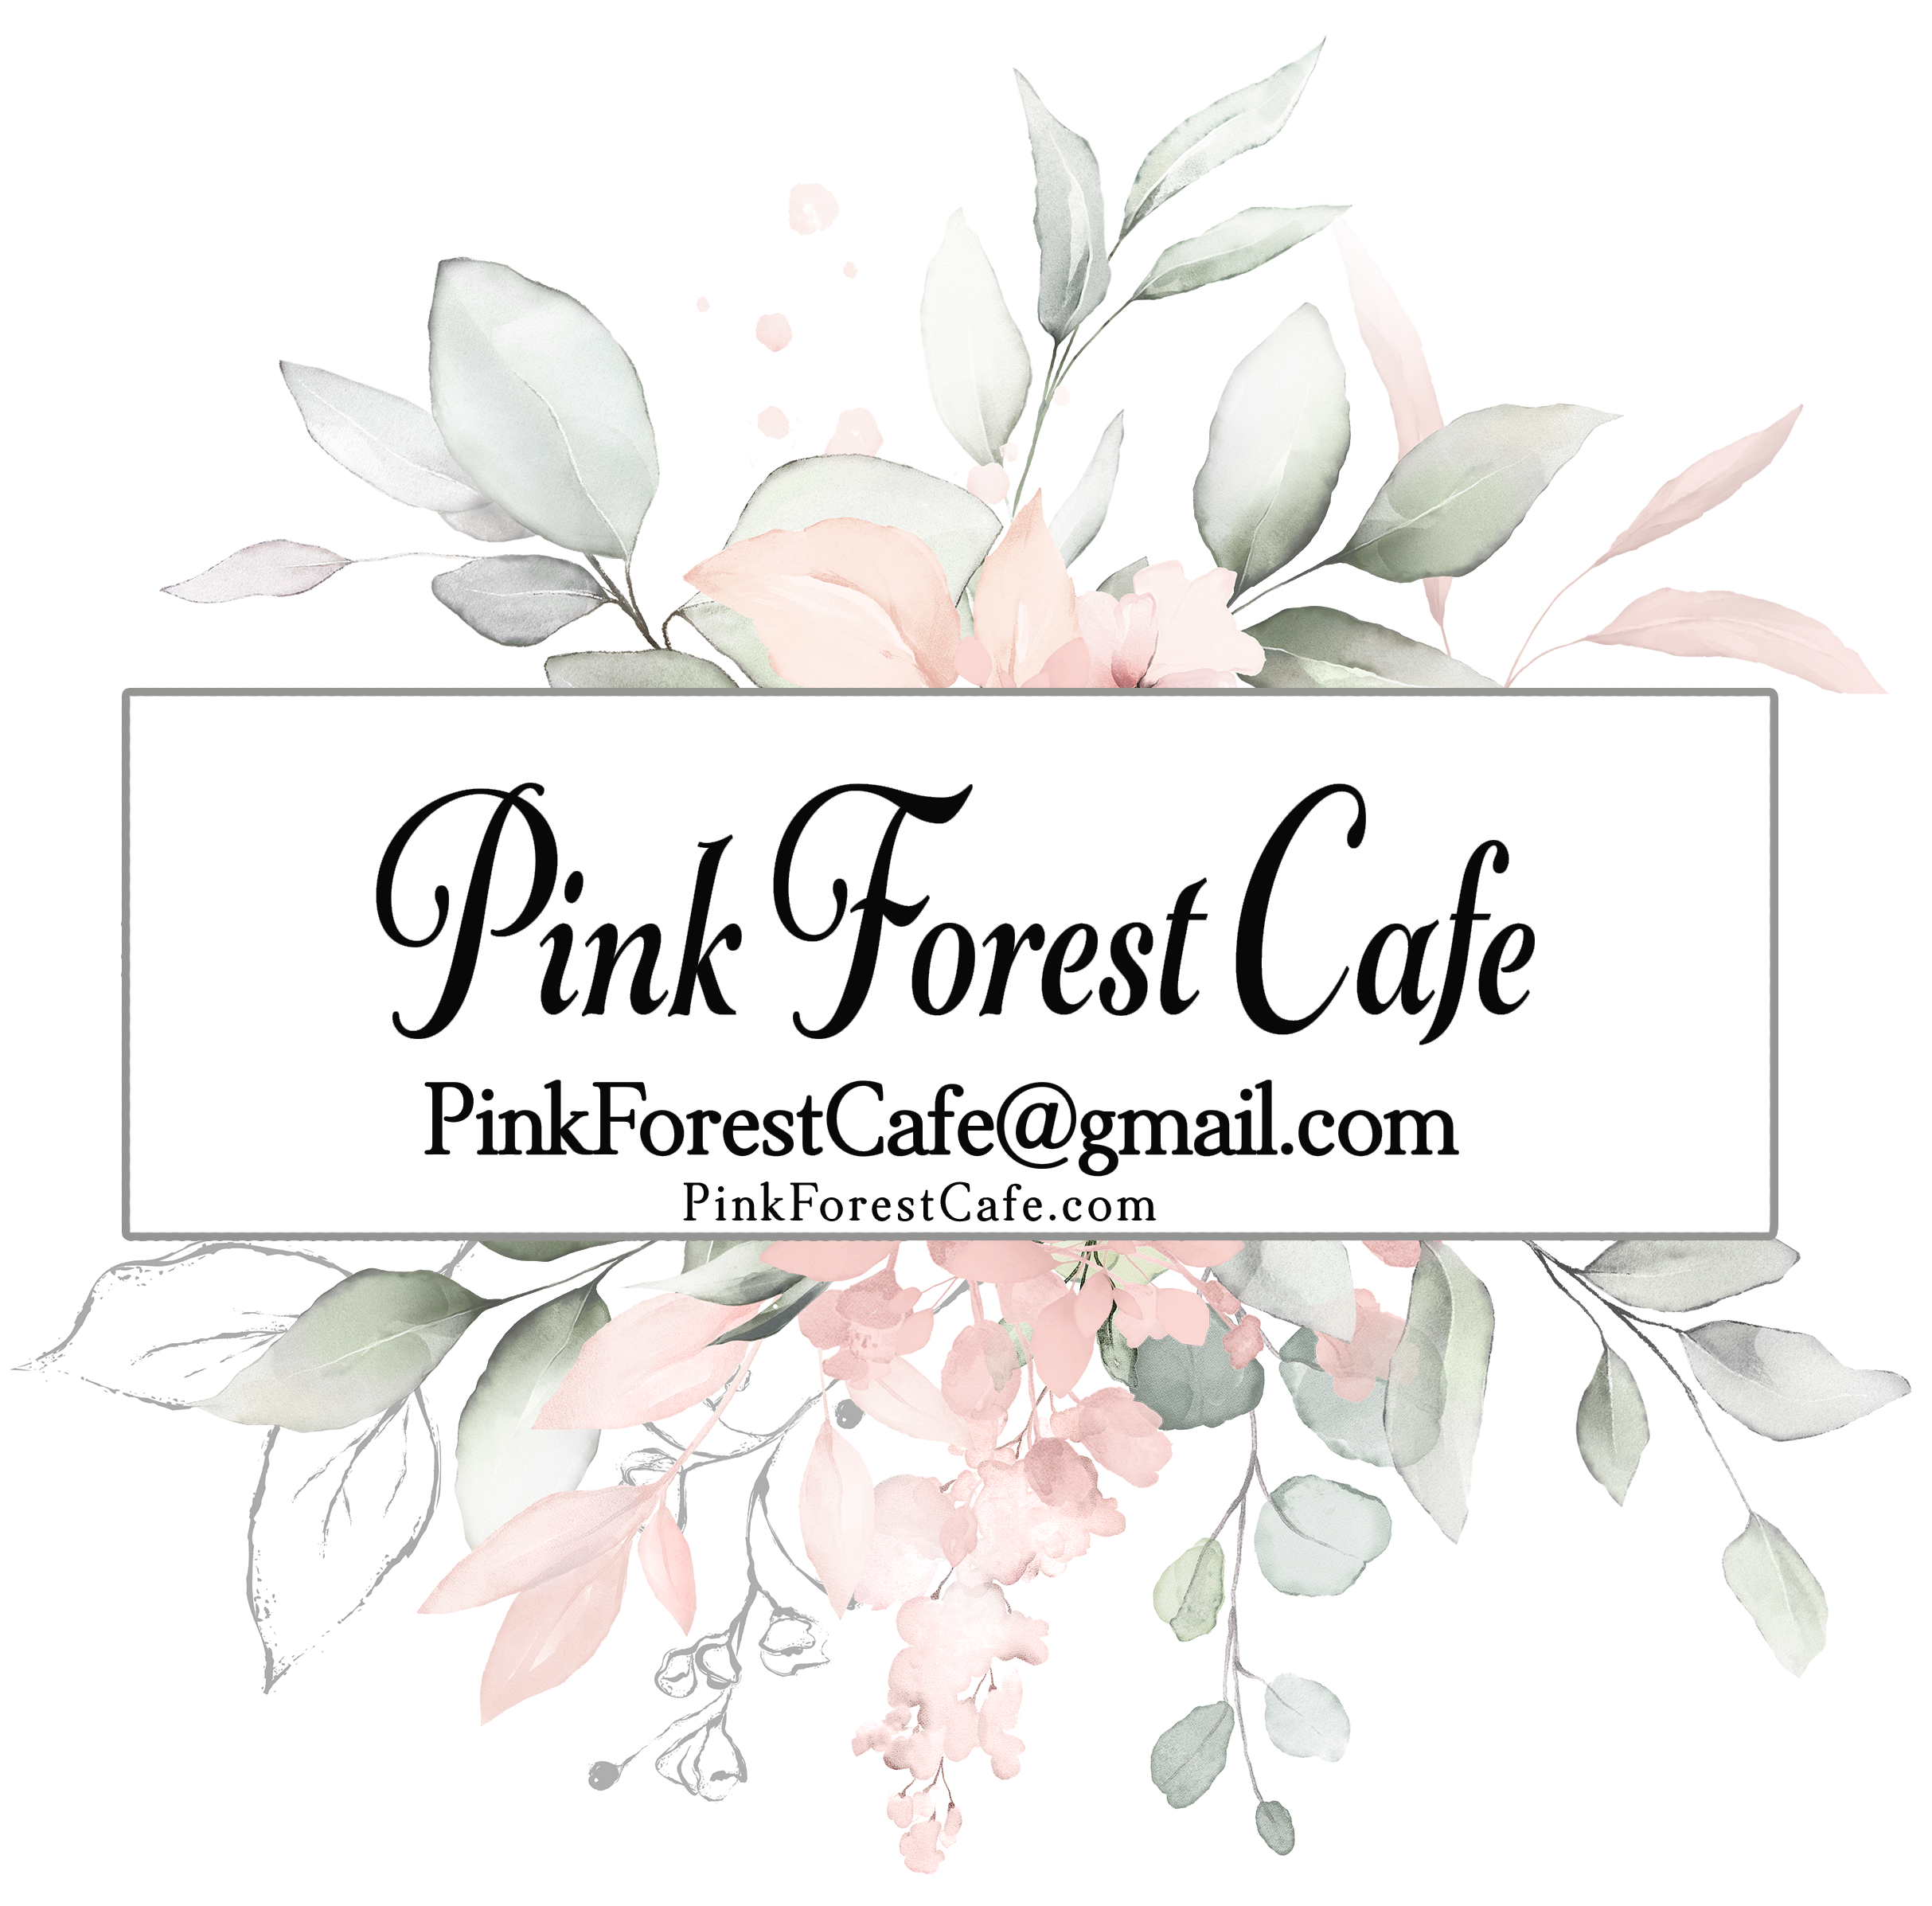 2 - 40" Blush Pink Peony Wall Decal Sticker Peonies Rose Floral Flower Decals Sticker Art Boho Decor